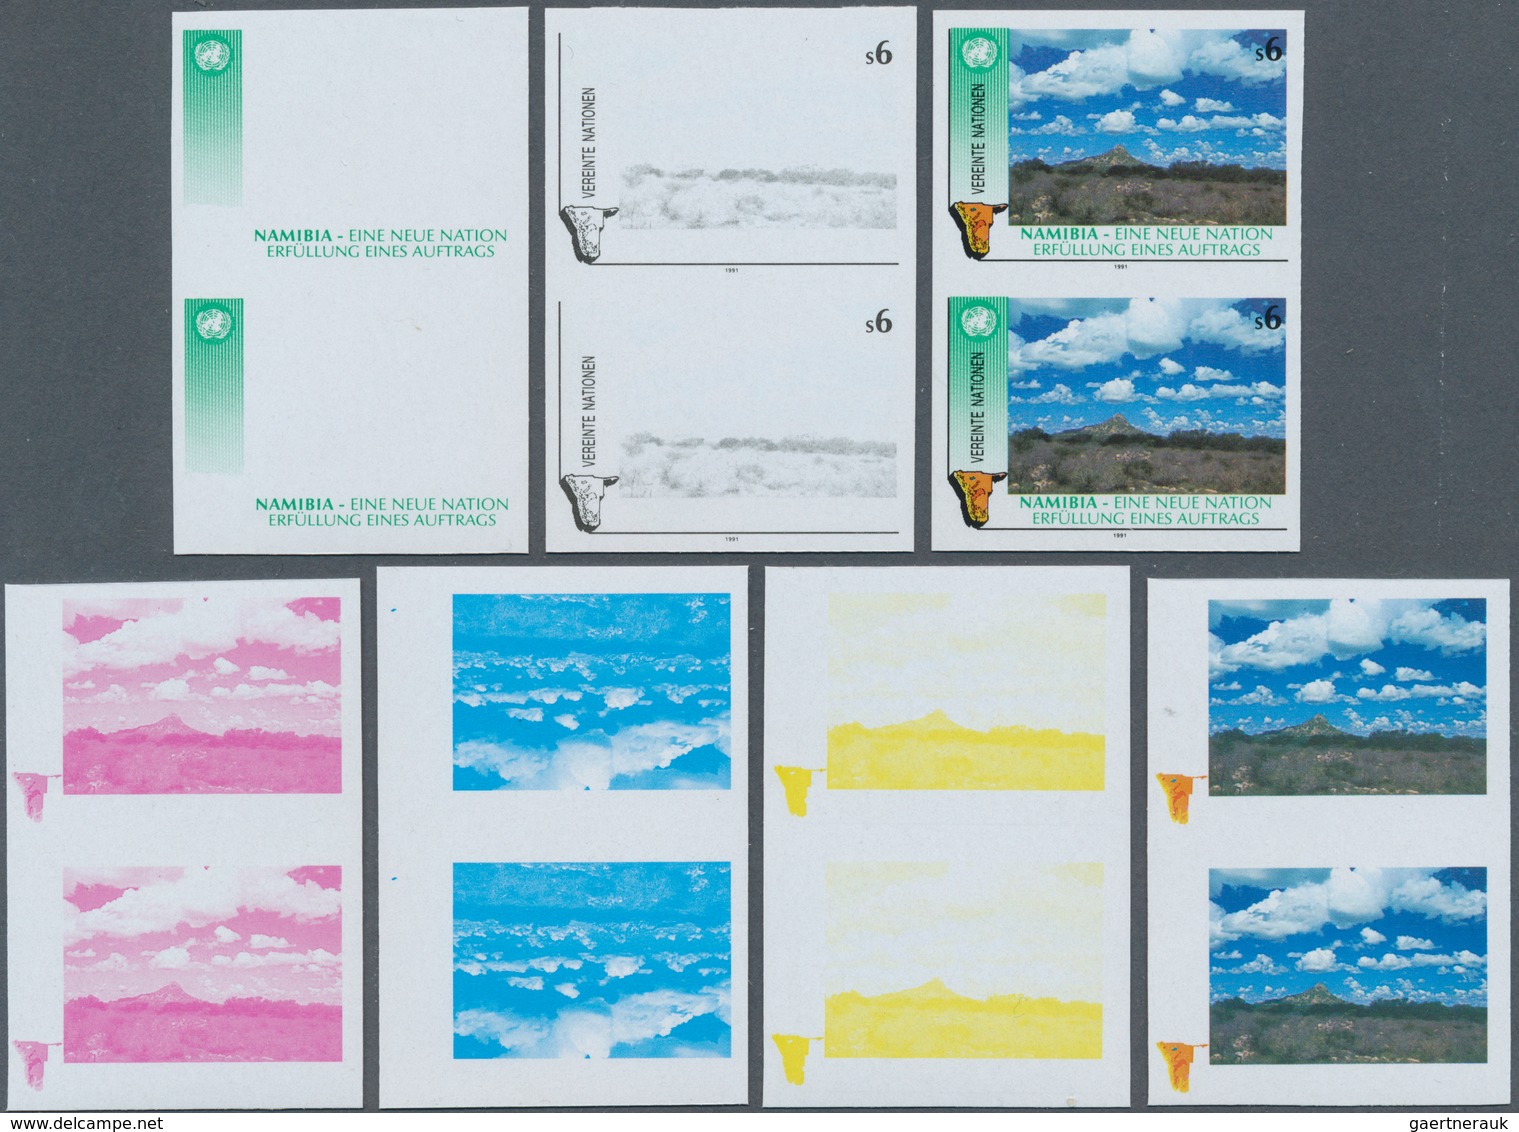 Vereinte Nationen - Wien: 1991. Progressive Proof (7 Phases), Viz Color Separations, In Vertical Pai - Unused Stamps